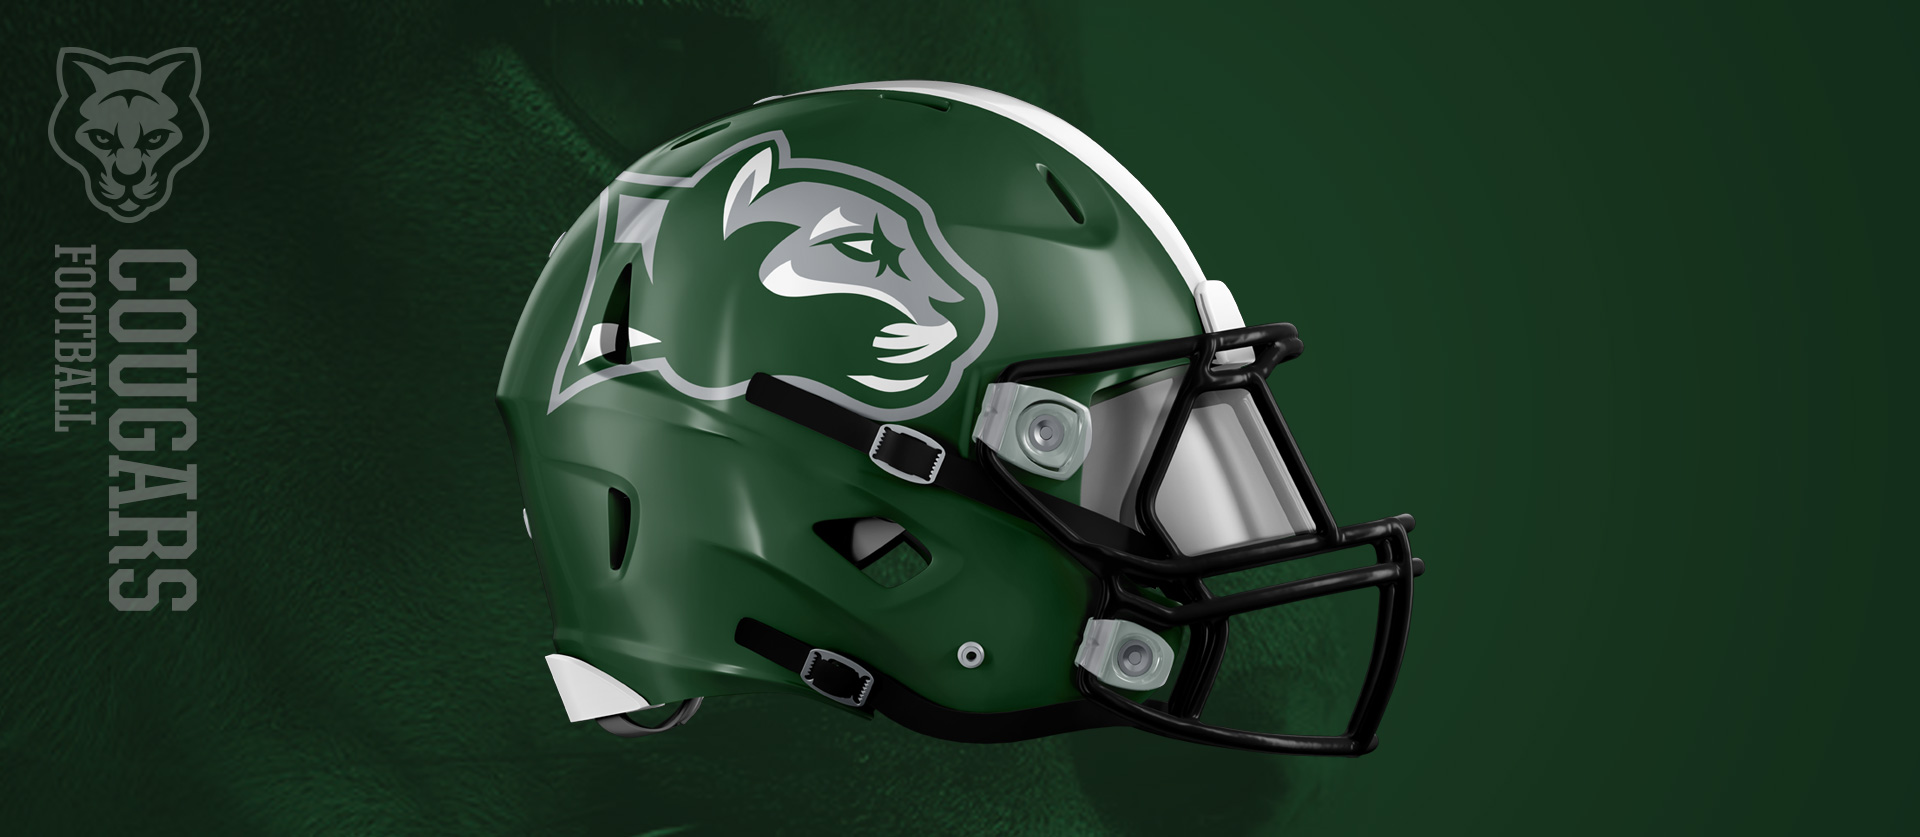 The George School - Football Helmet Design